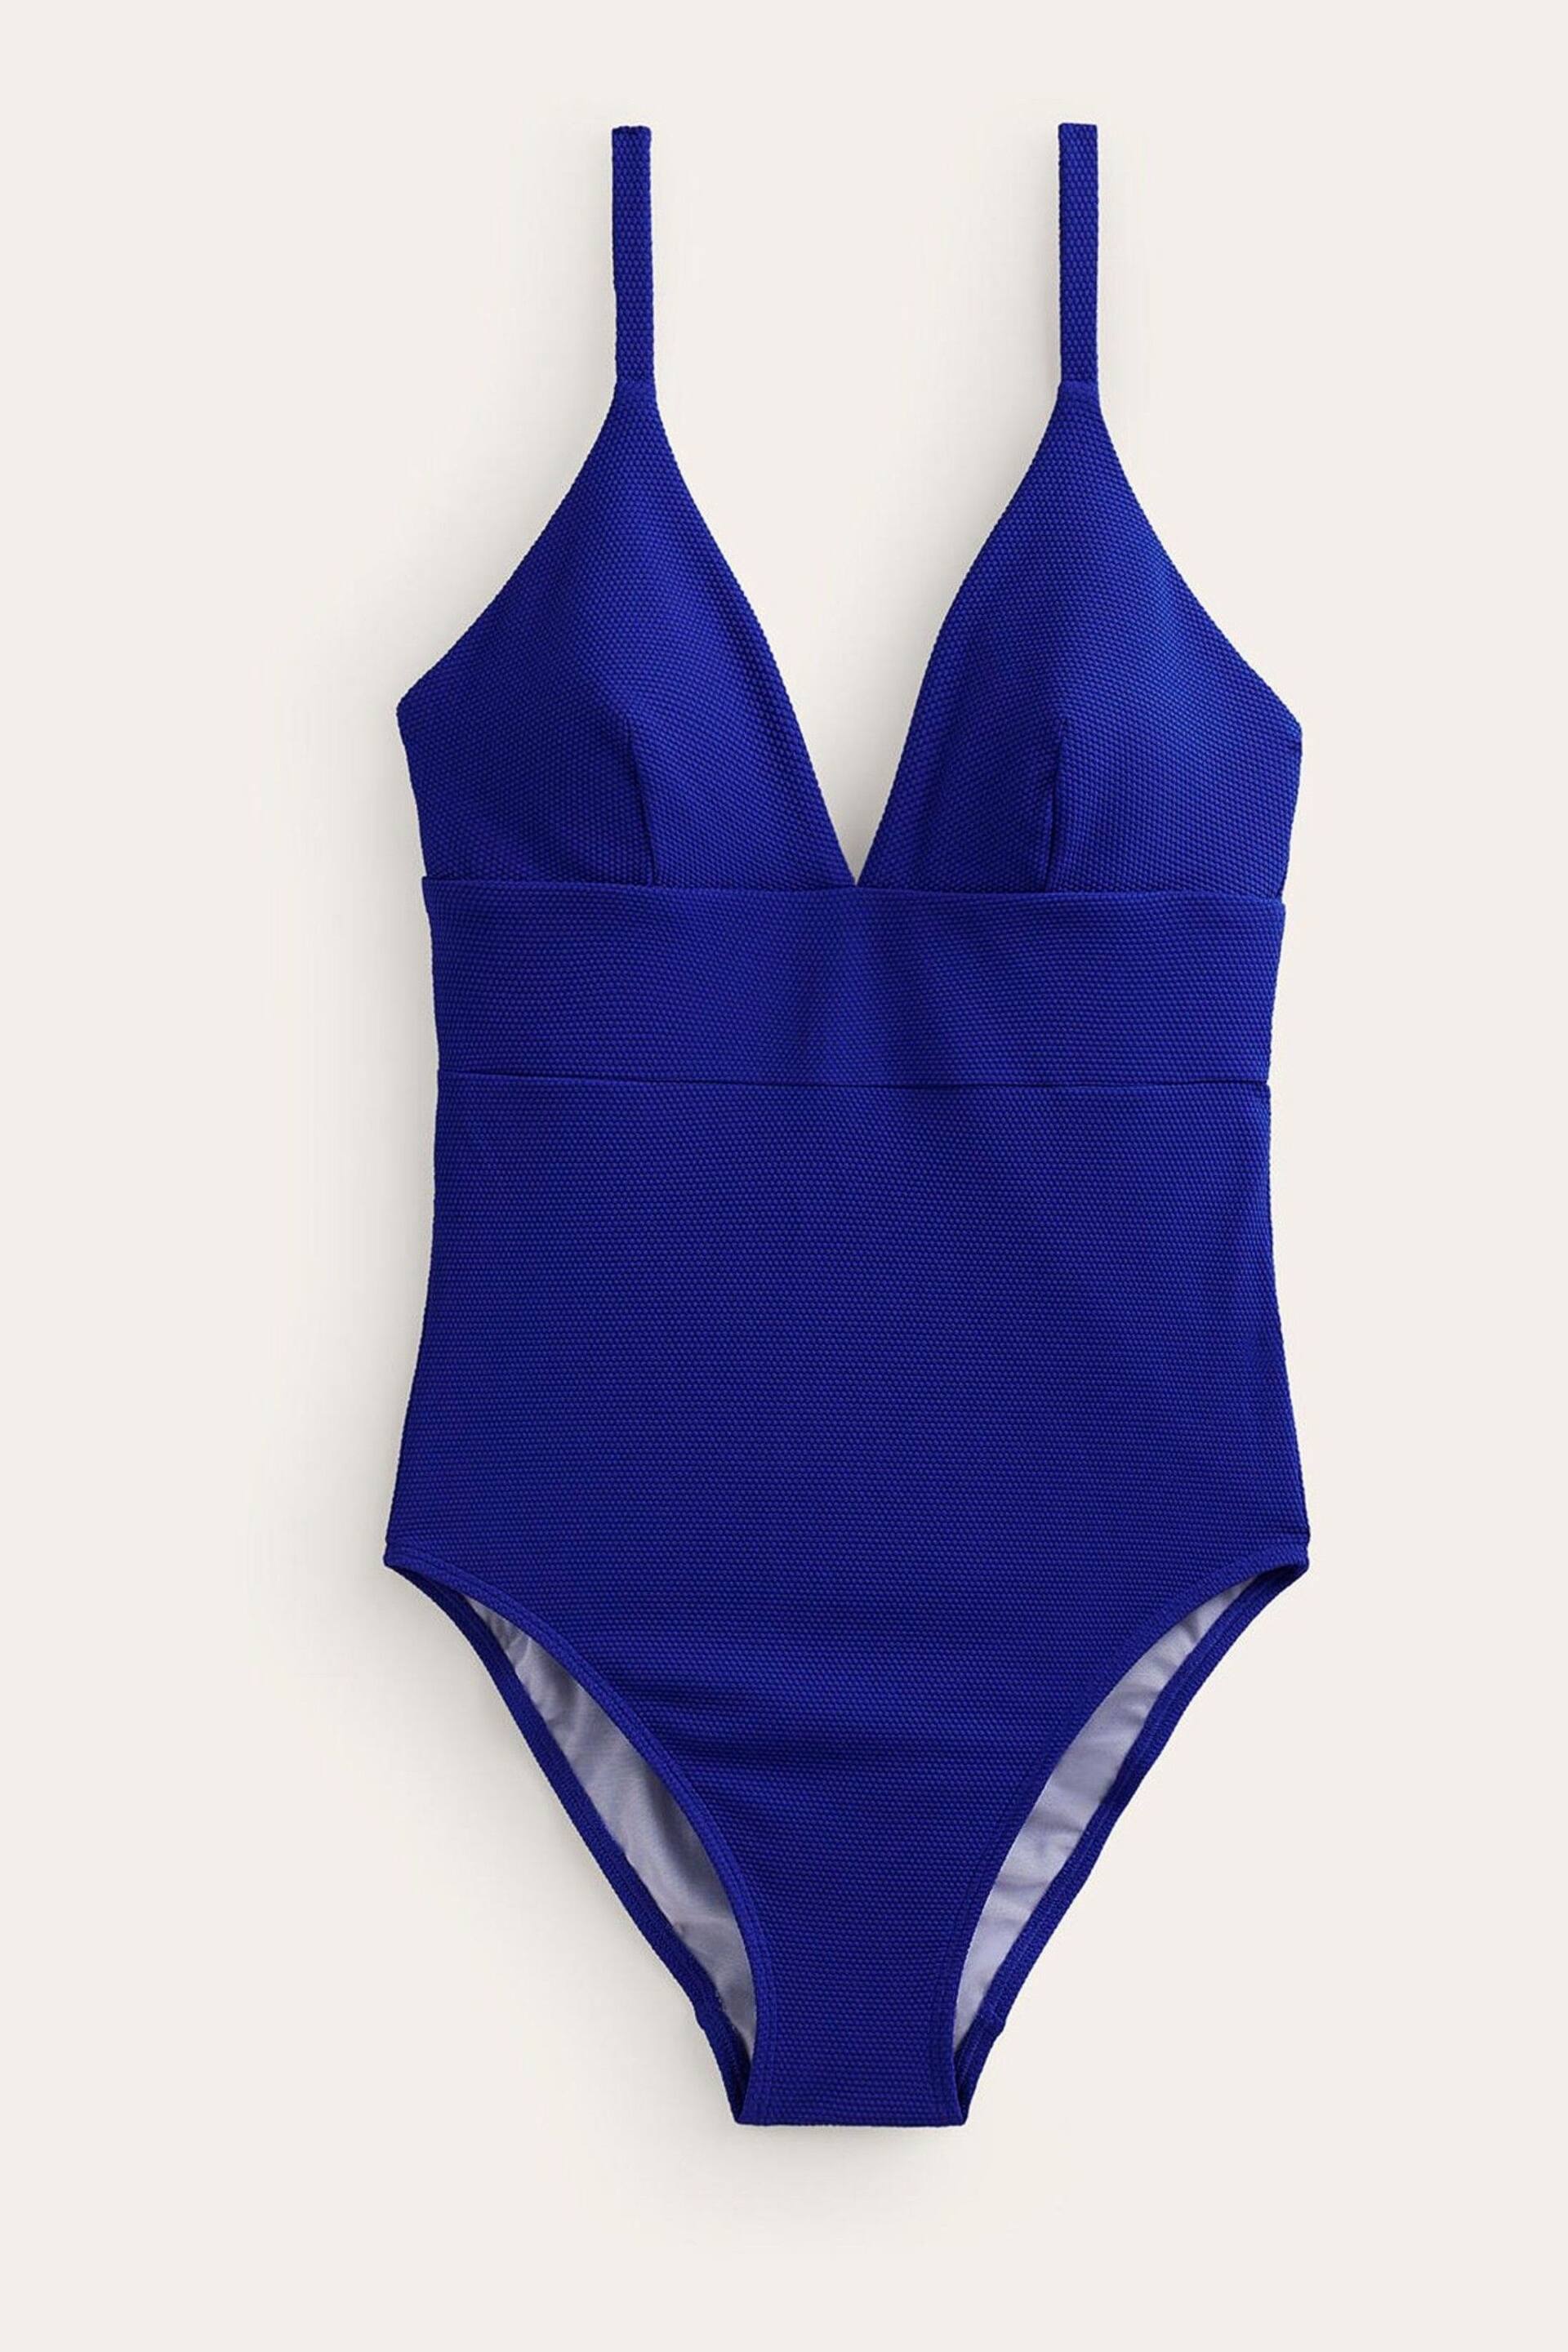 Boden Purple/blue Arezzo V-Neck Panel Swimsuit - Image 5 of 6